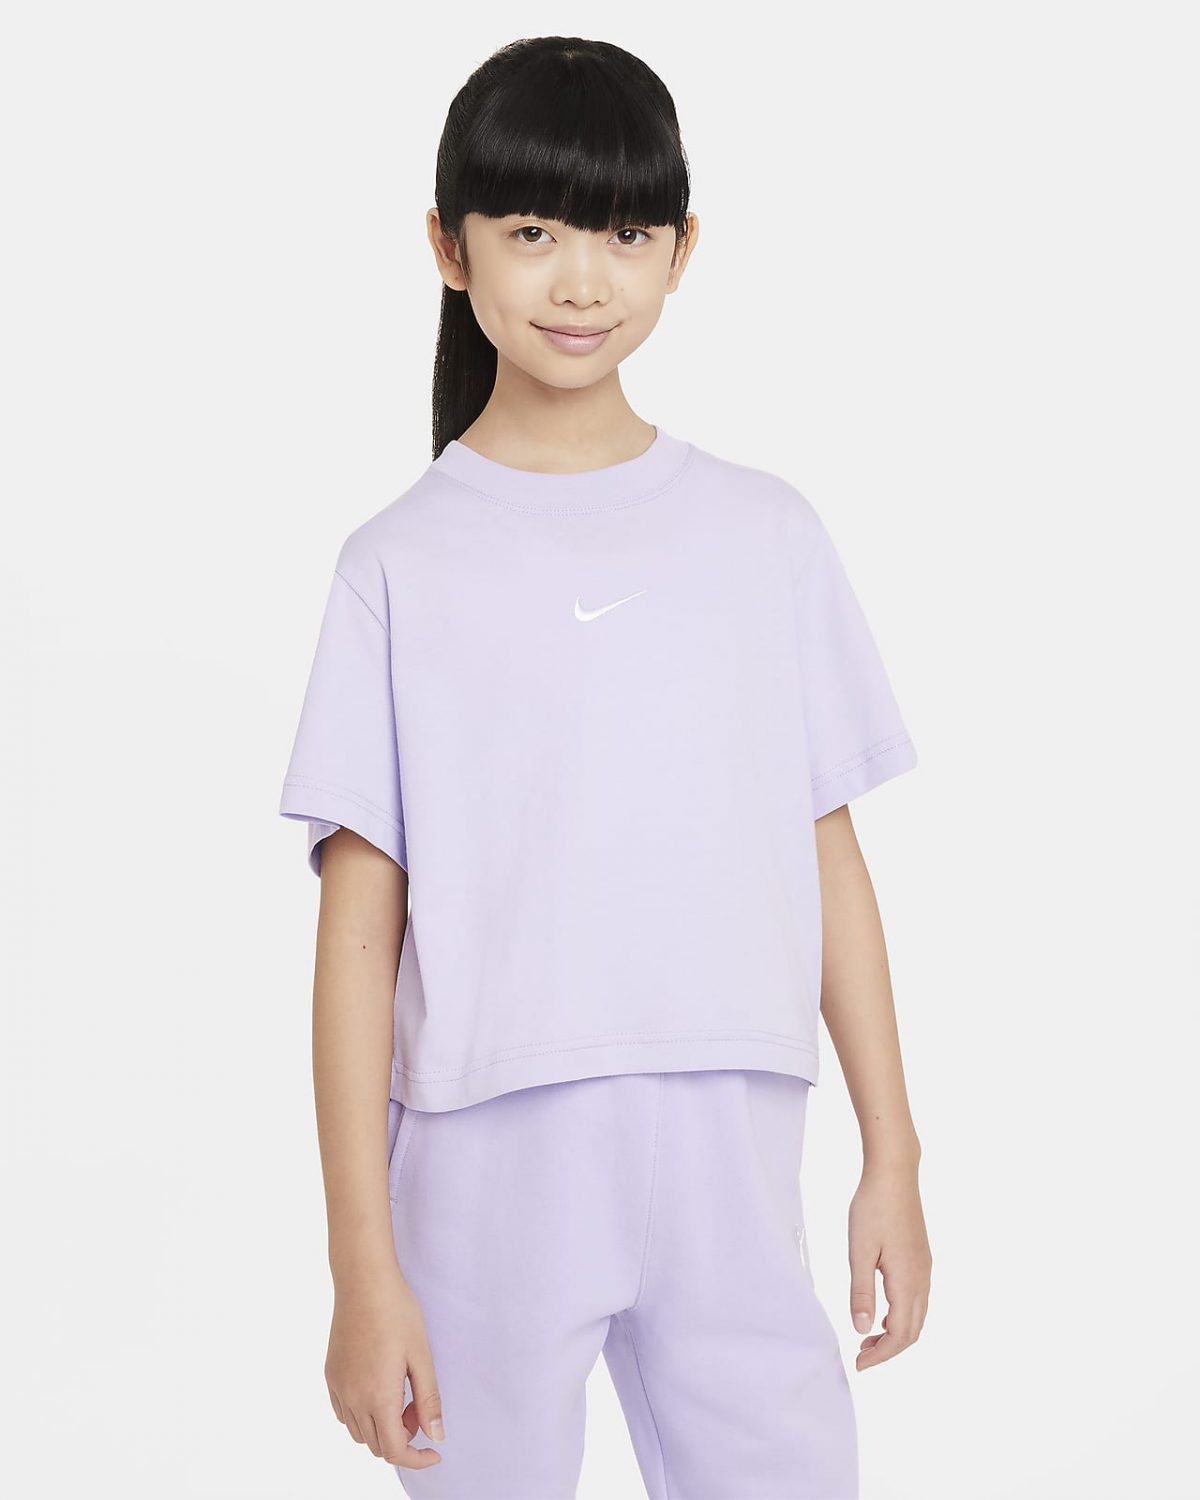 Детская футболка Nike Sportswear белая фото